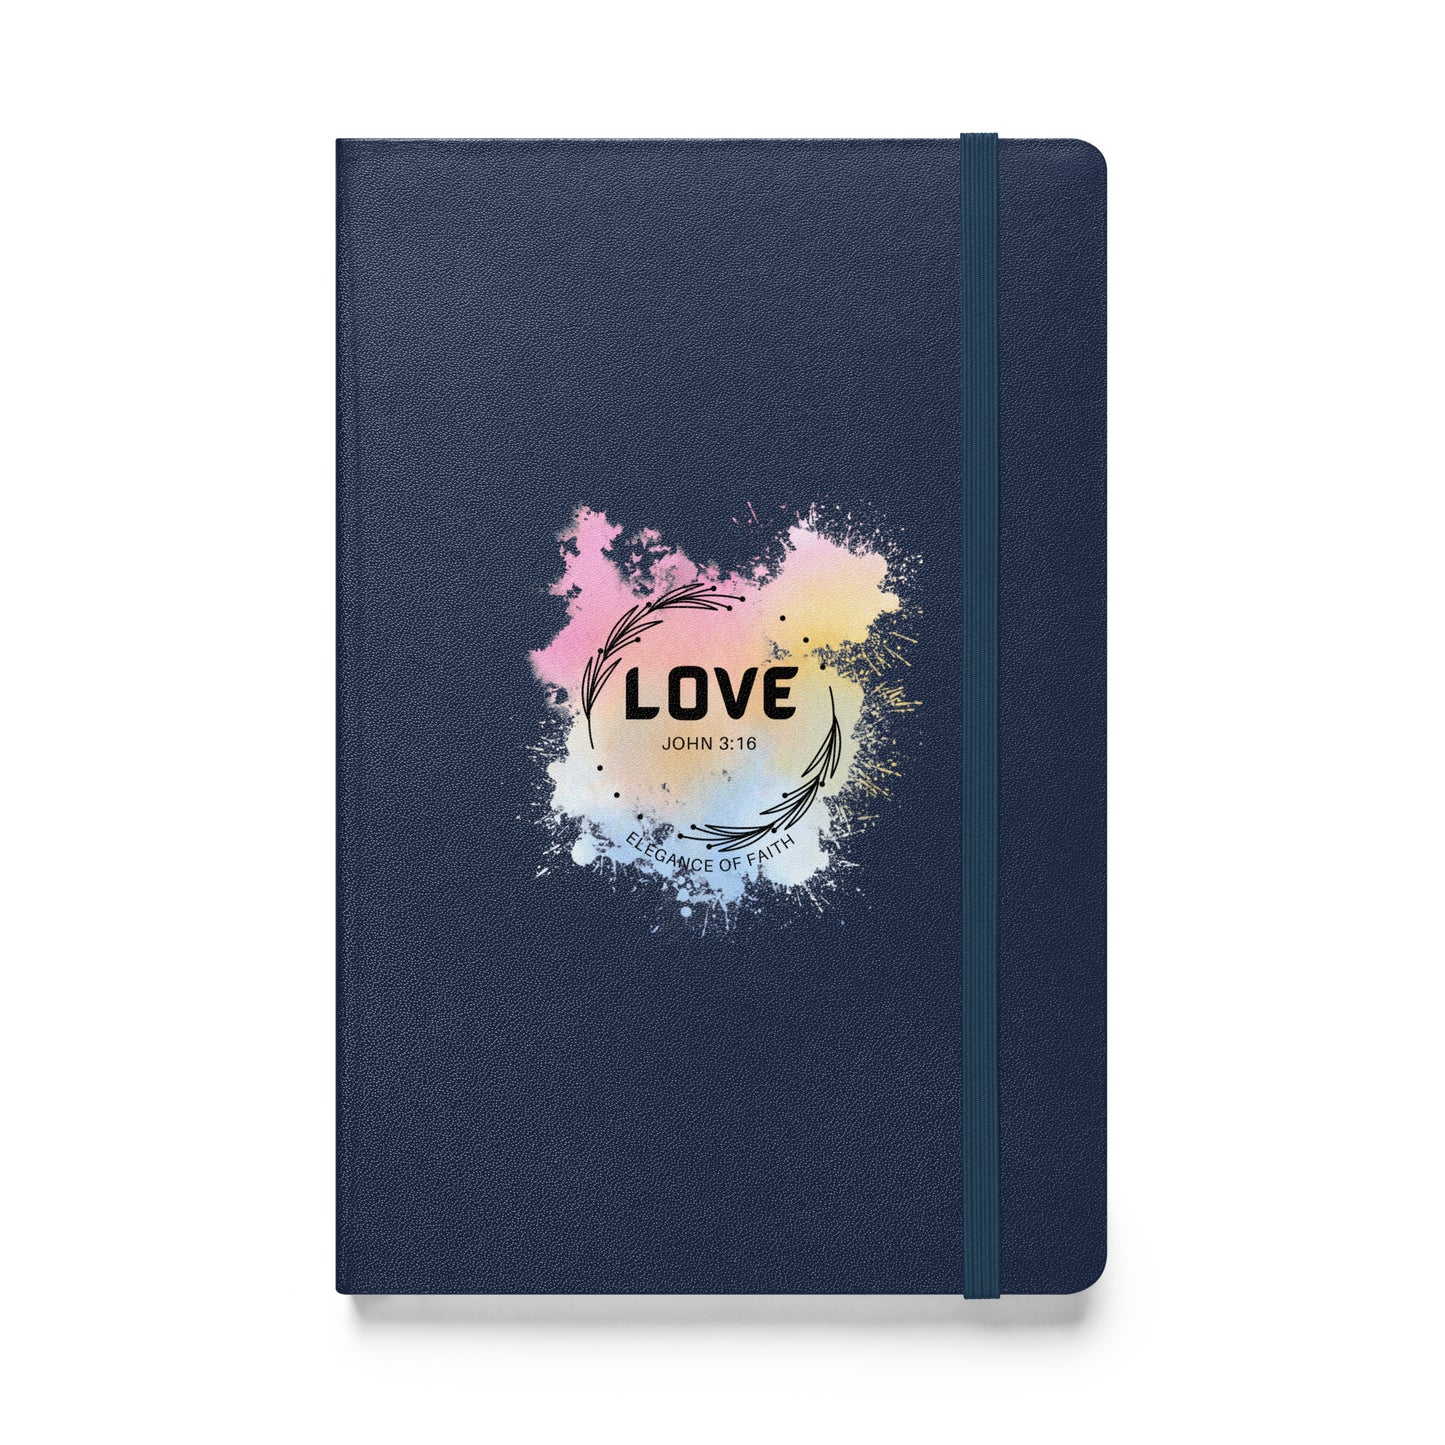 LOVE  Hardcover bound notebook